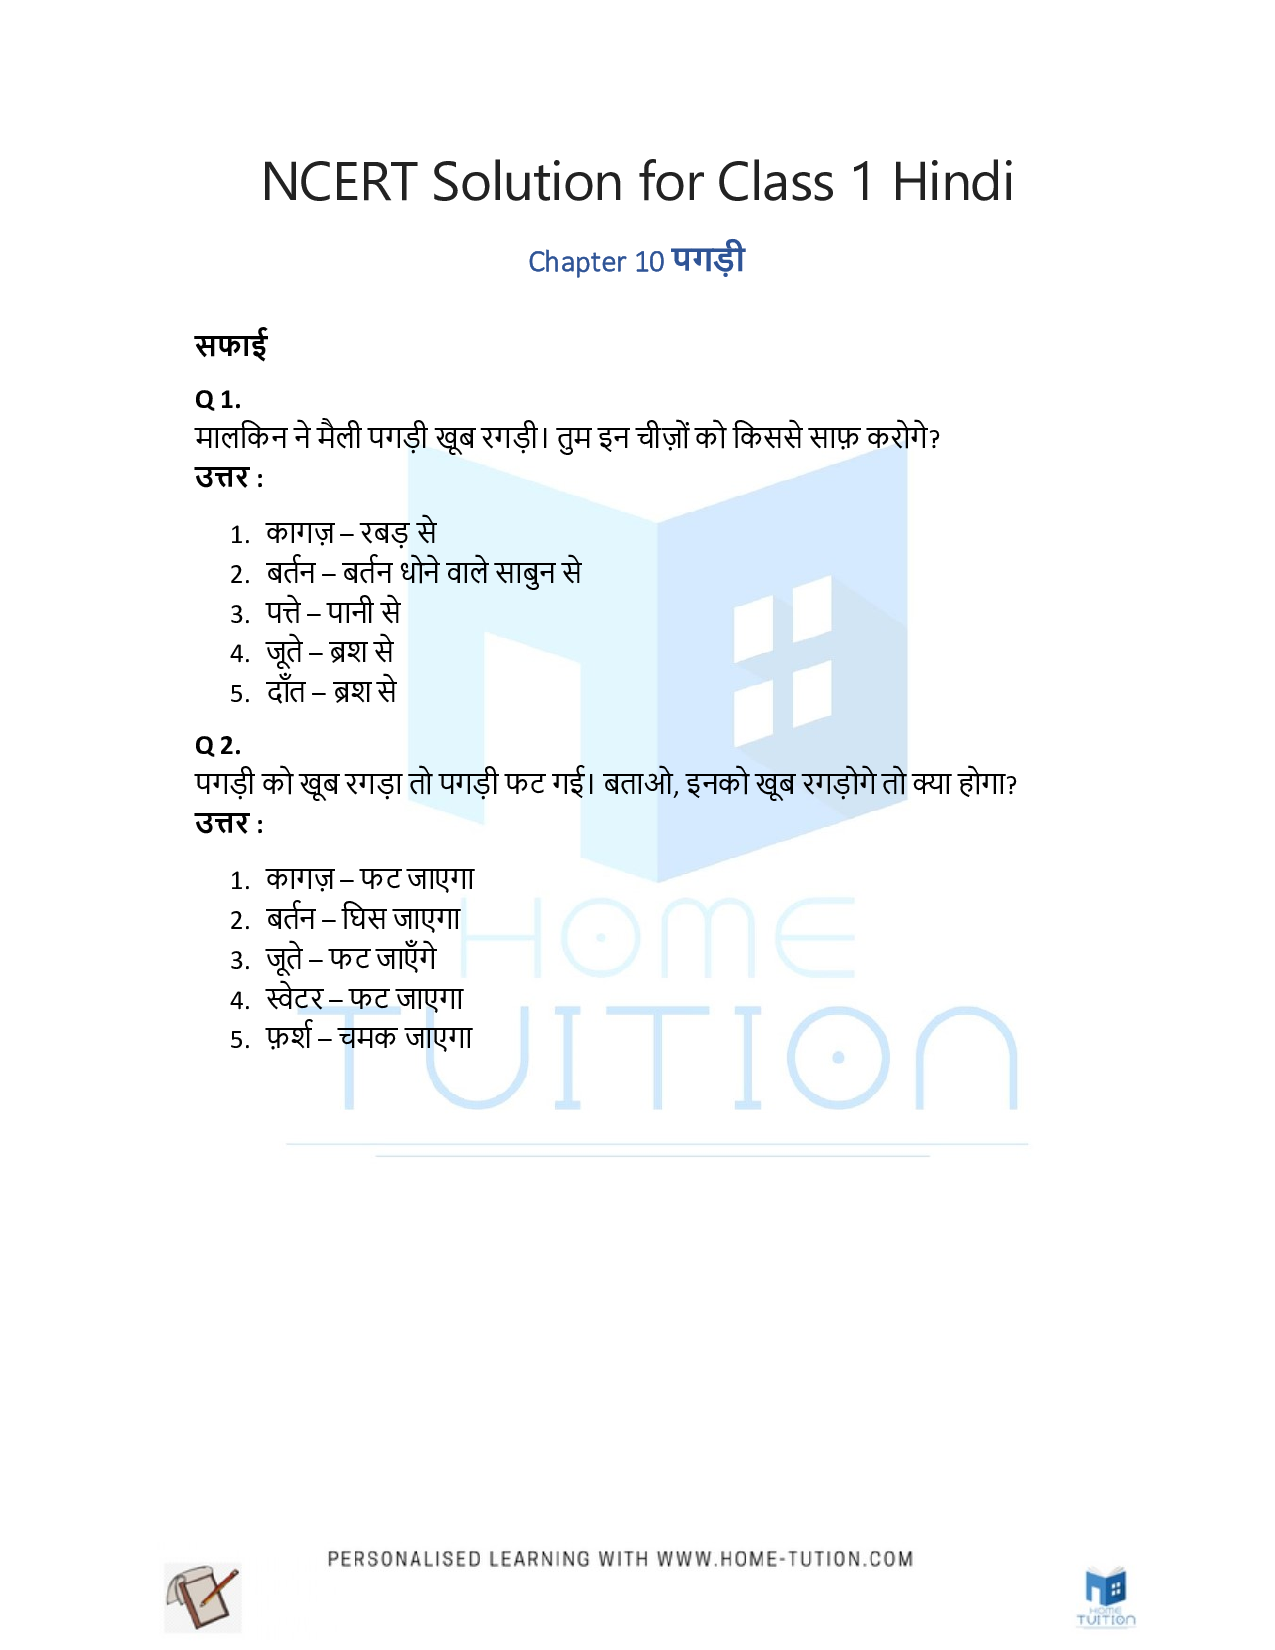 NCERT Solution for Class 1 Hindi Chapter 10 Pagadi (पगड़ी)